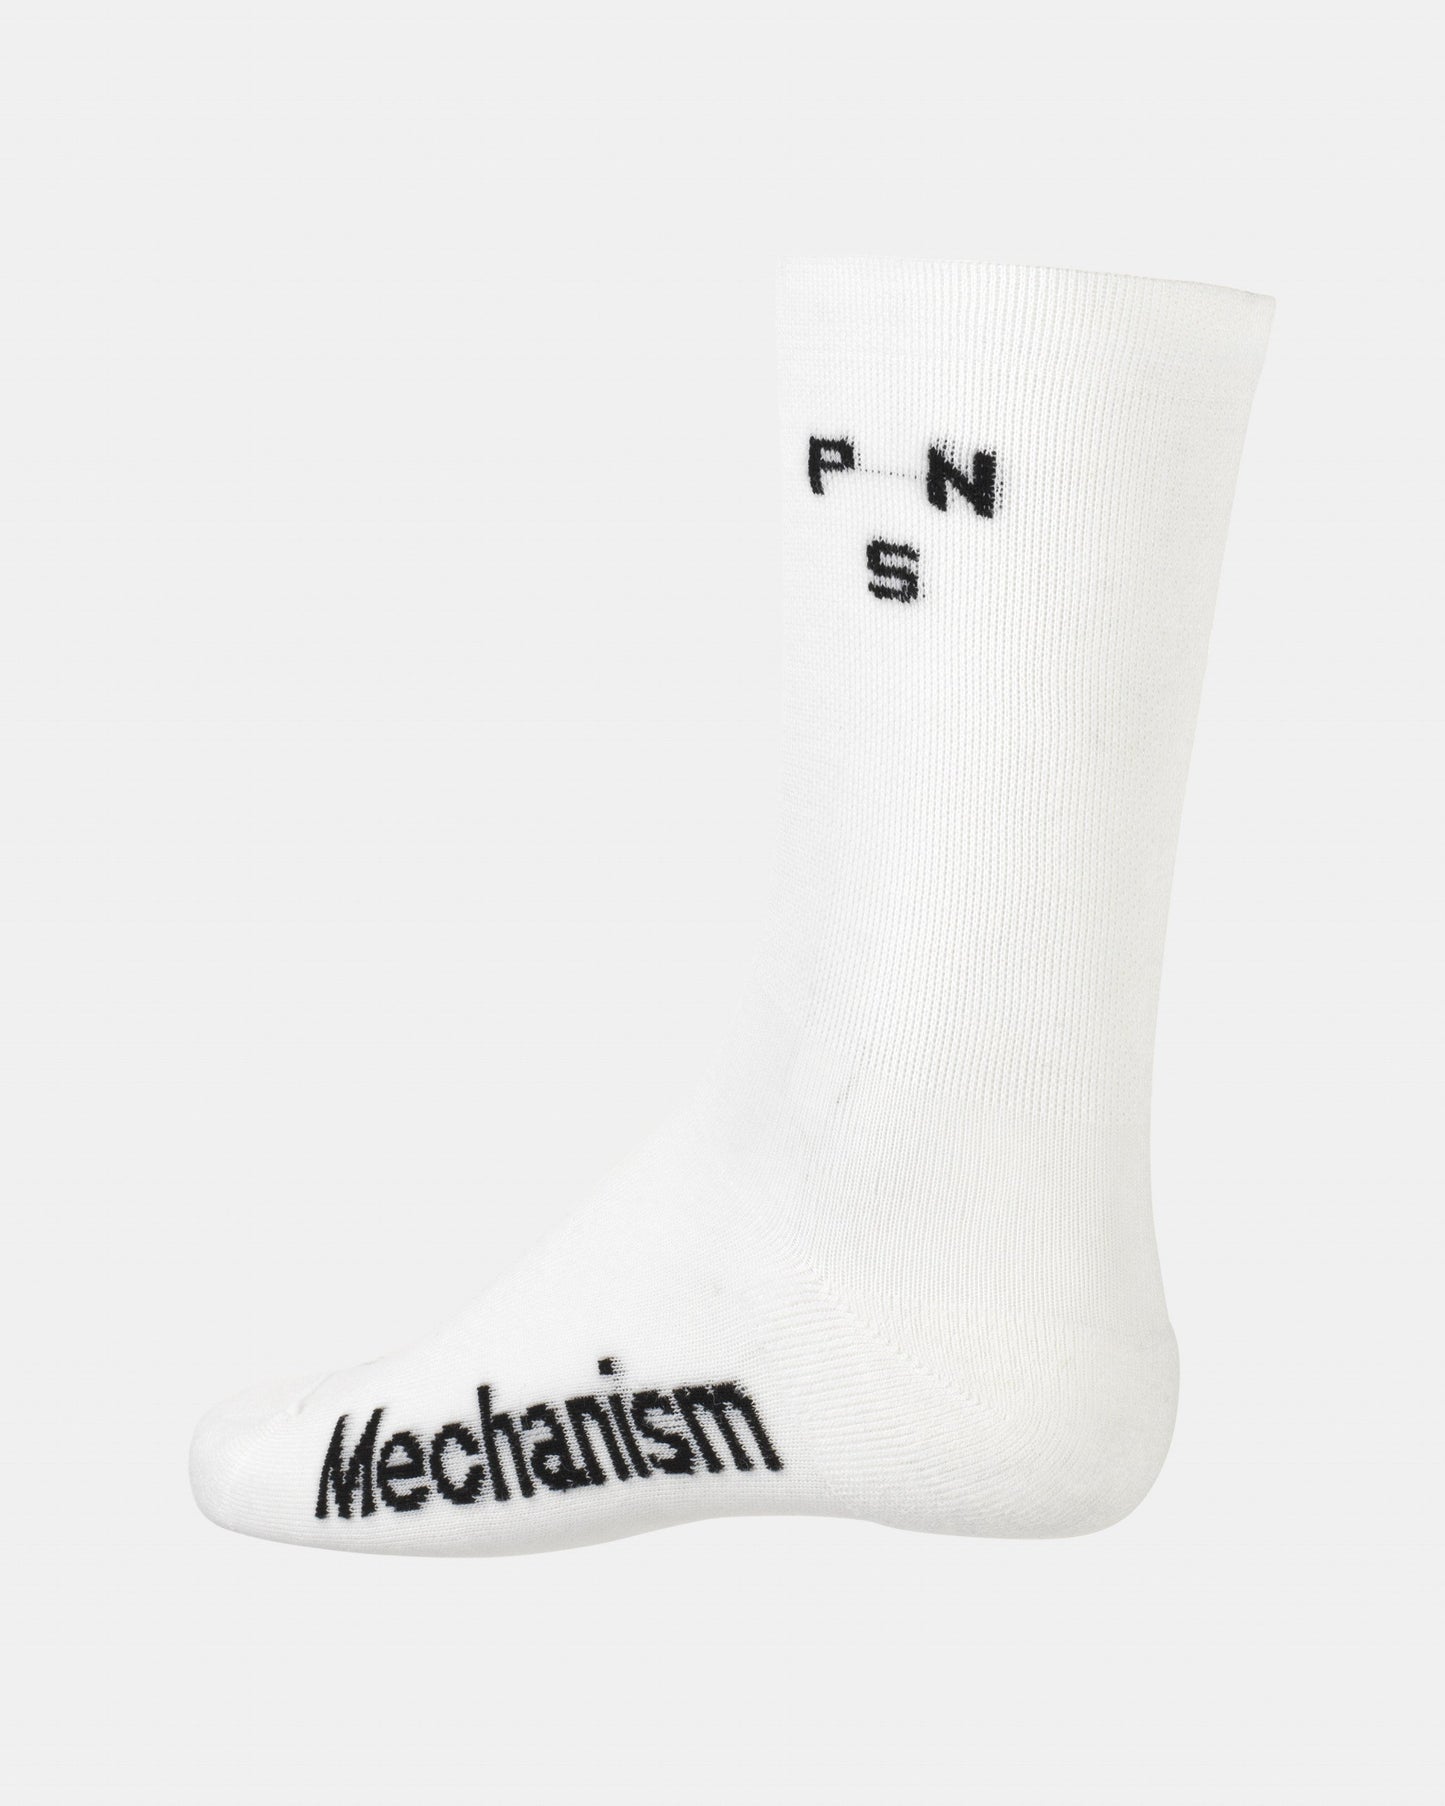 PNS Mechanism Thermal Socks